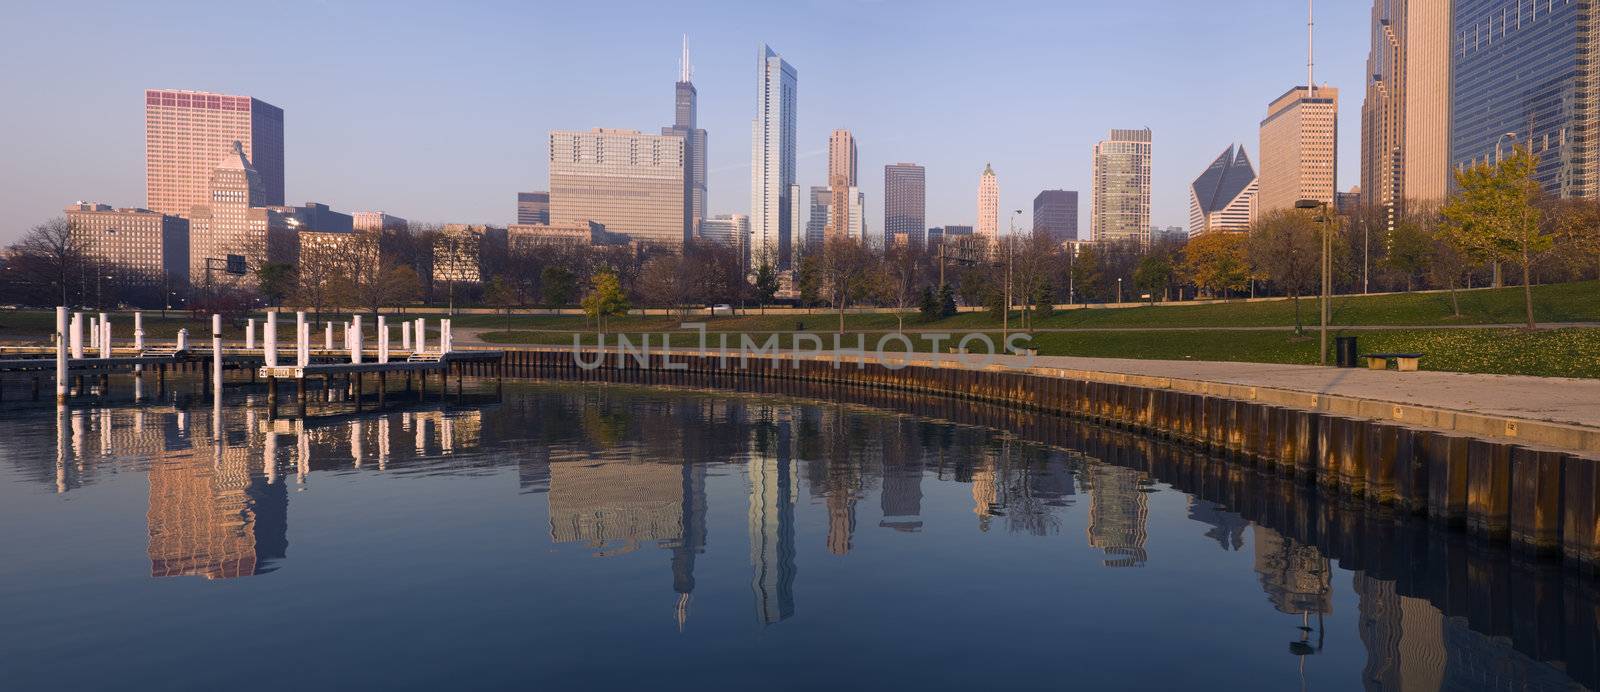 Morning panorama of Chicago, Illinois.